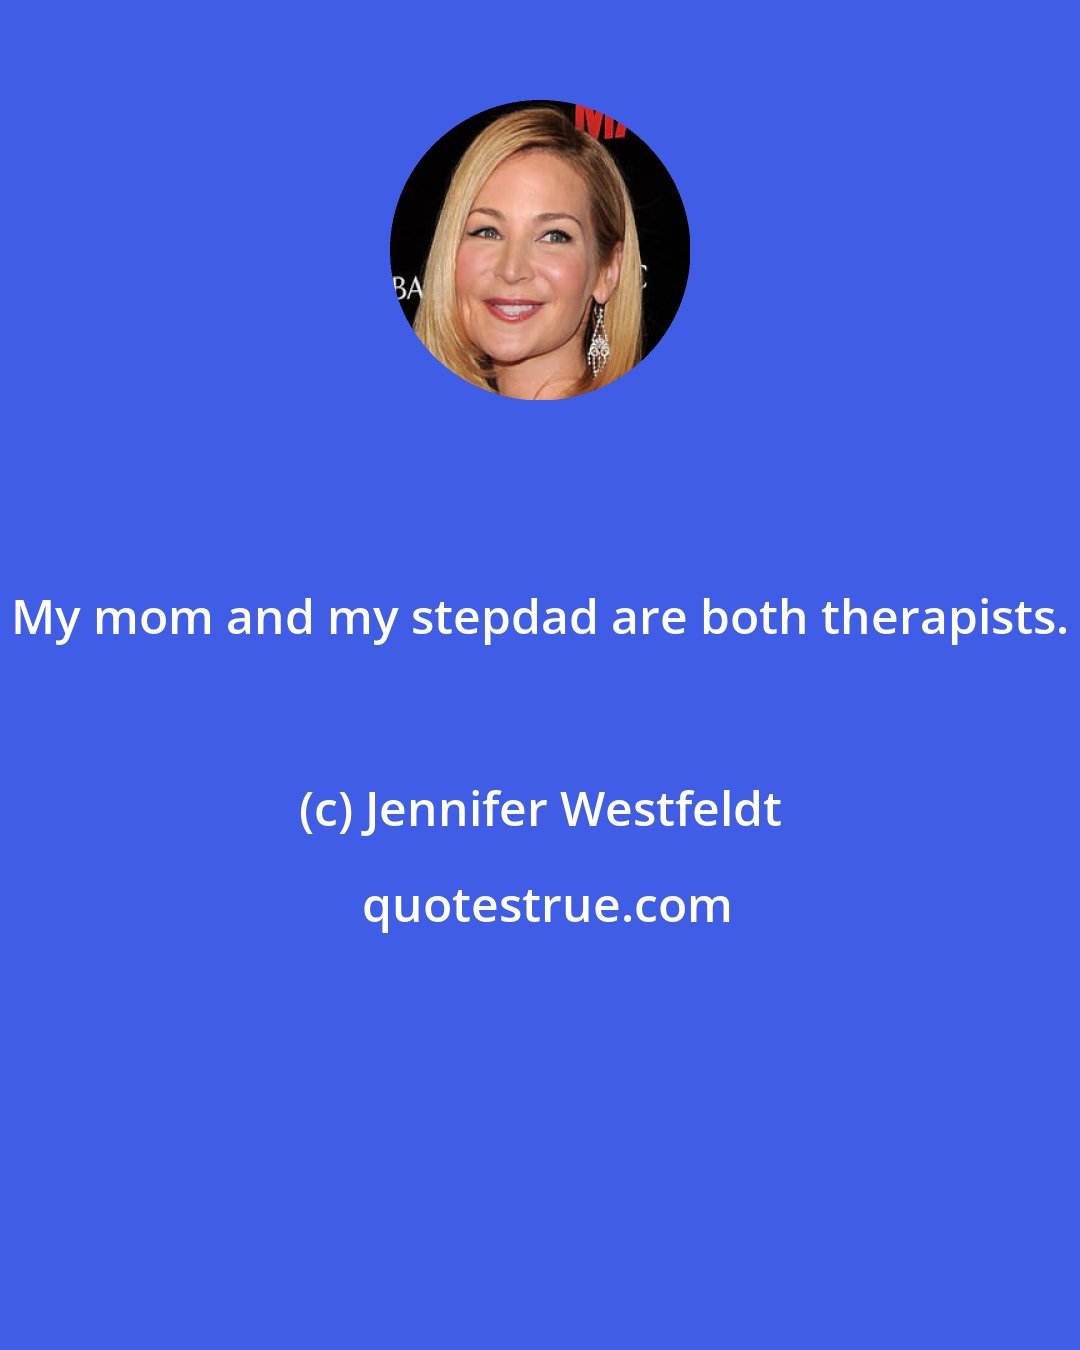 Jennifer Westfeldt: My mom and my stepdad are both therapists.